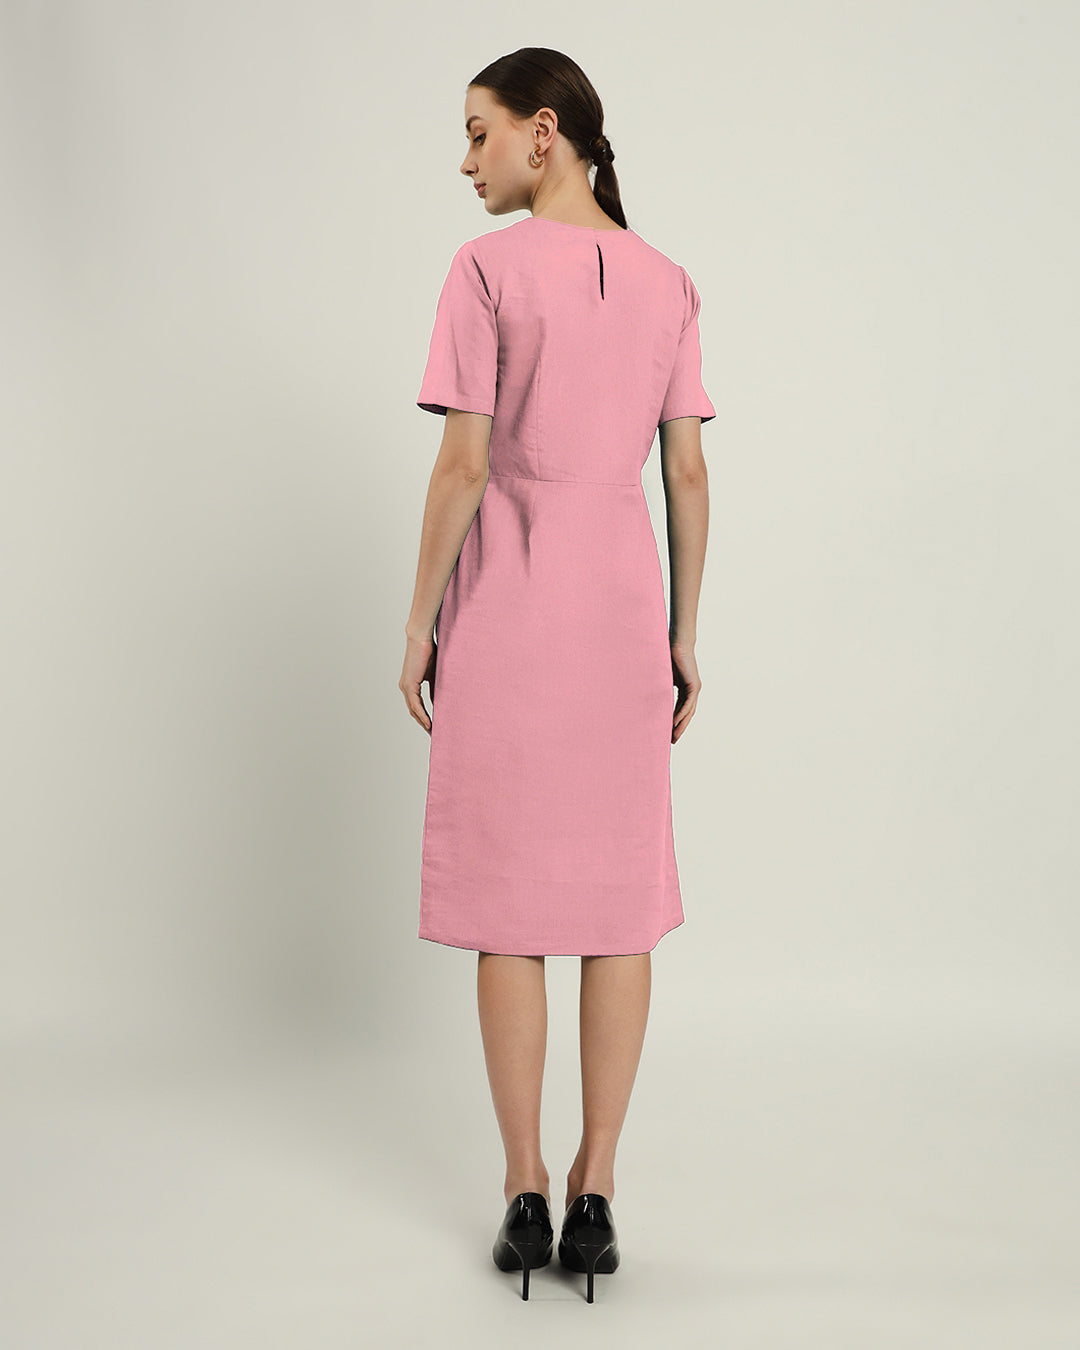 The Cairo Fondant Pink Cotton Dress